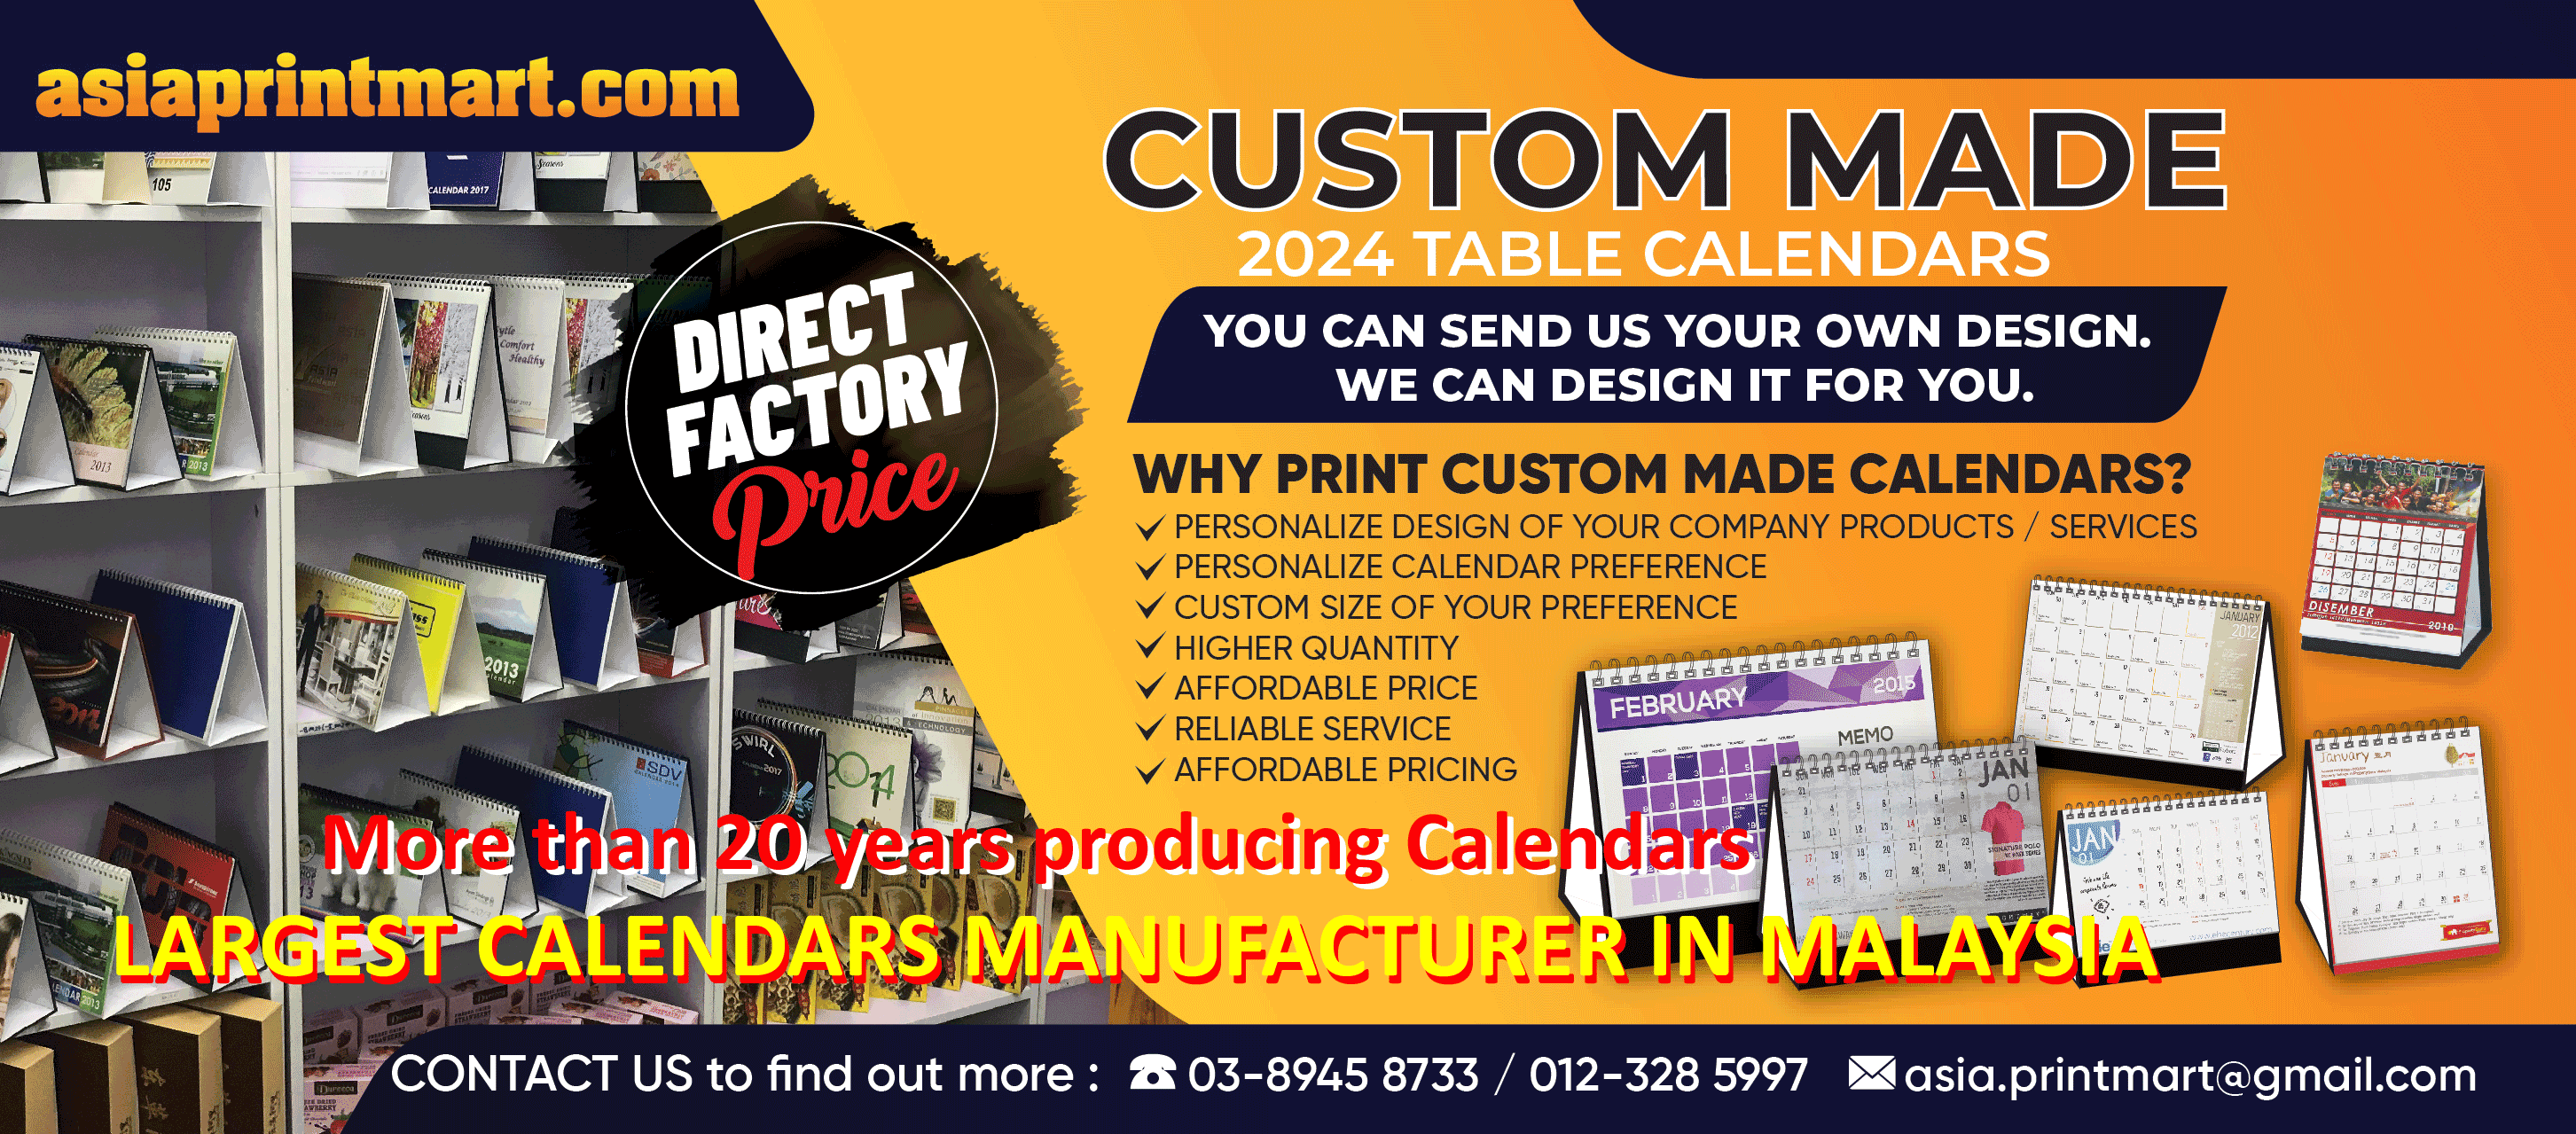 Custom Made Table Calendars 2024 | Print 2024 Desk Calendars | Print 2024 Ready Made Table Calendars | Cetak Kalendar Meja 2024 | Calendars Supplier | Malaysia Calendars Printer | Calendars Manufacturer 2024